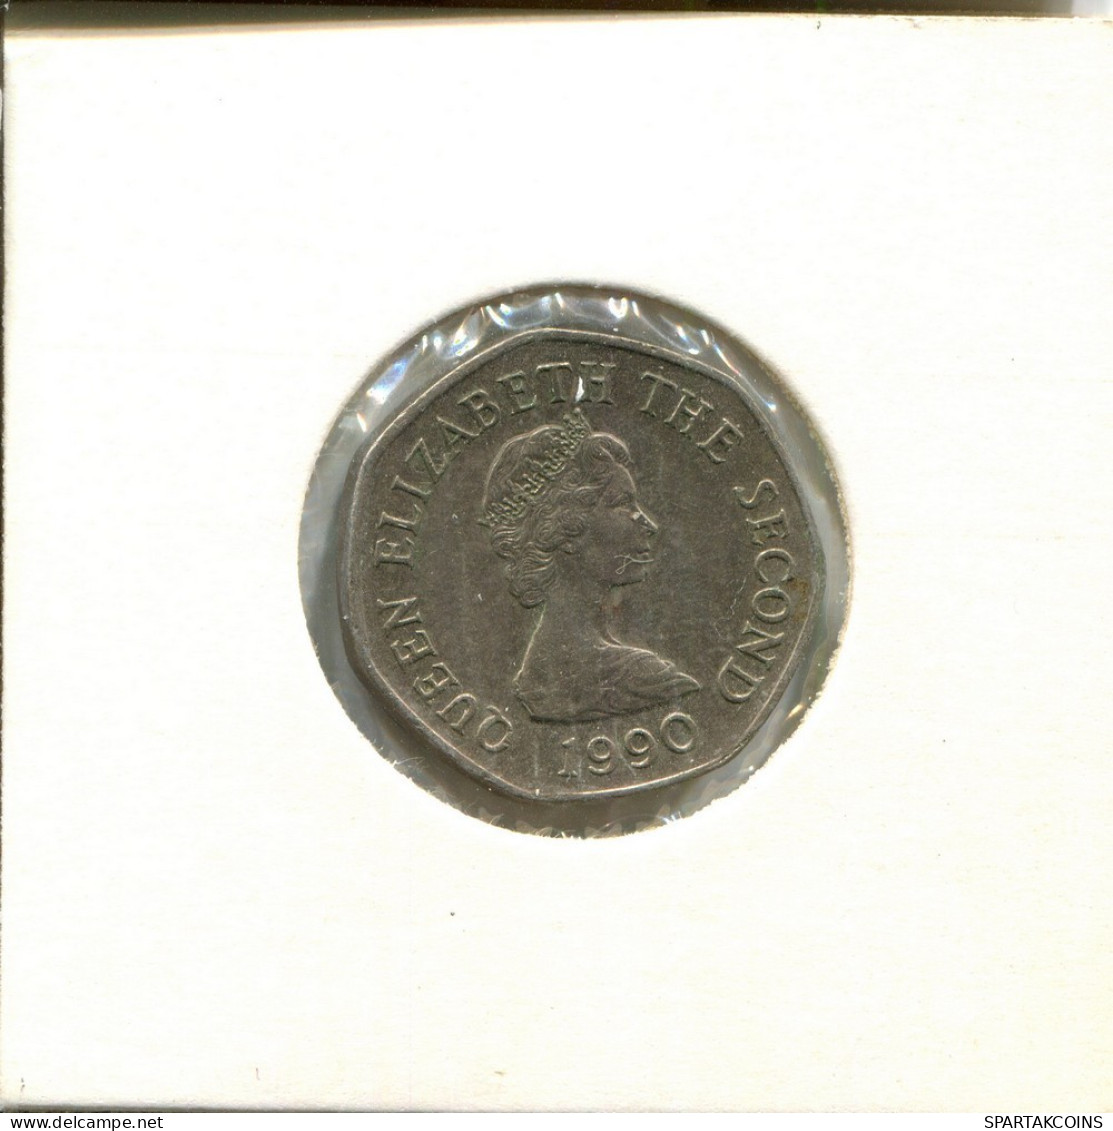 25 PENCE 1990 JERSEY Moneda #AU956.E.A - Jersey